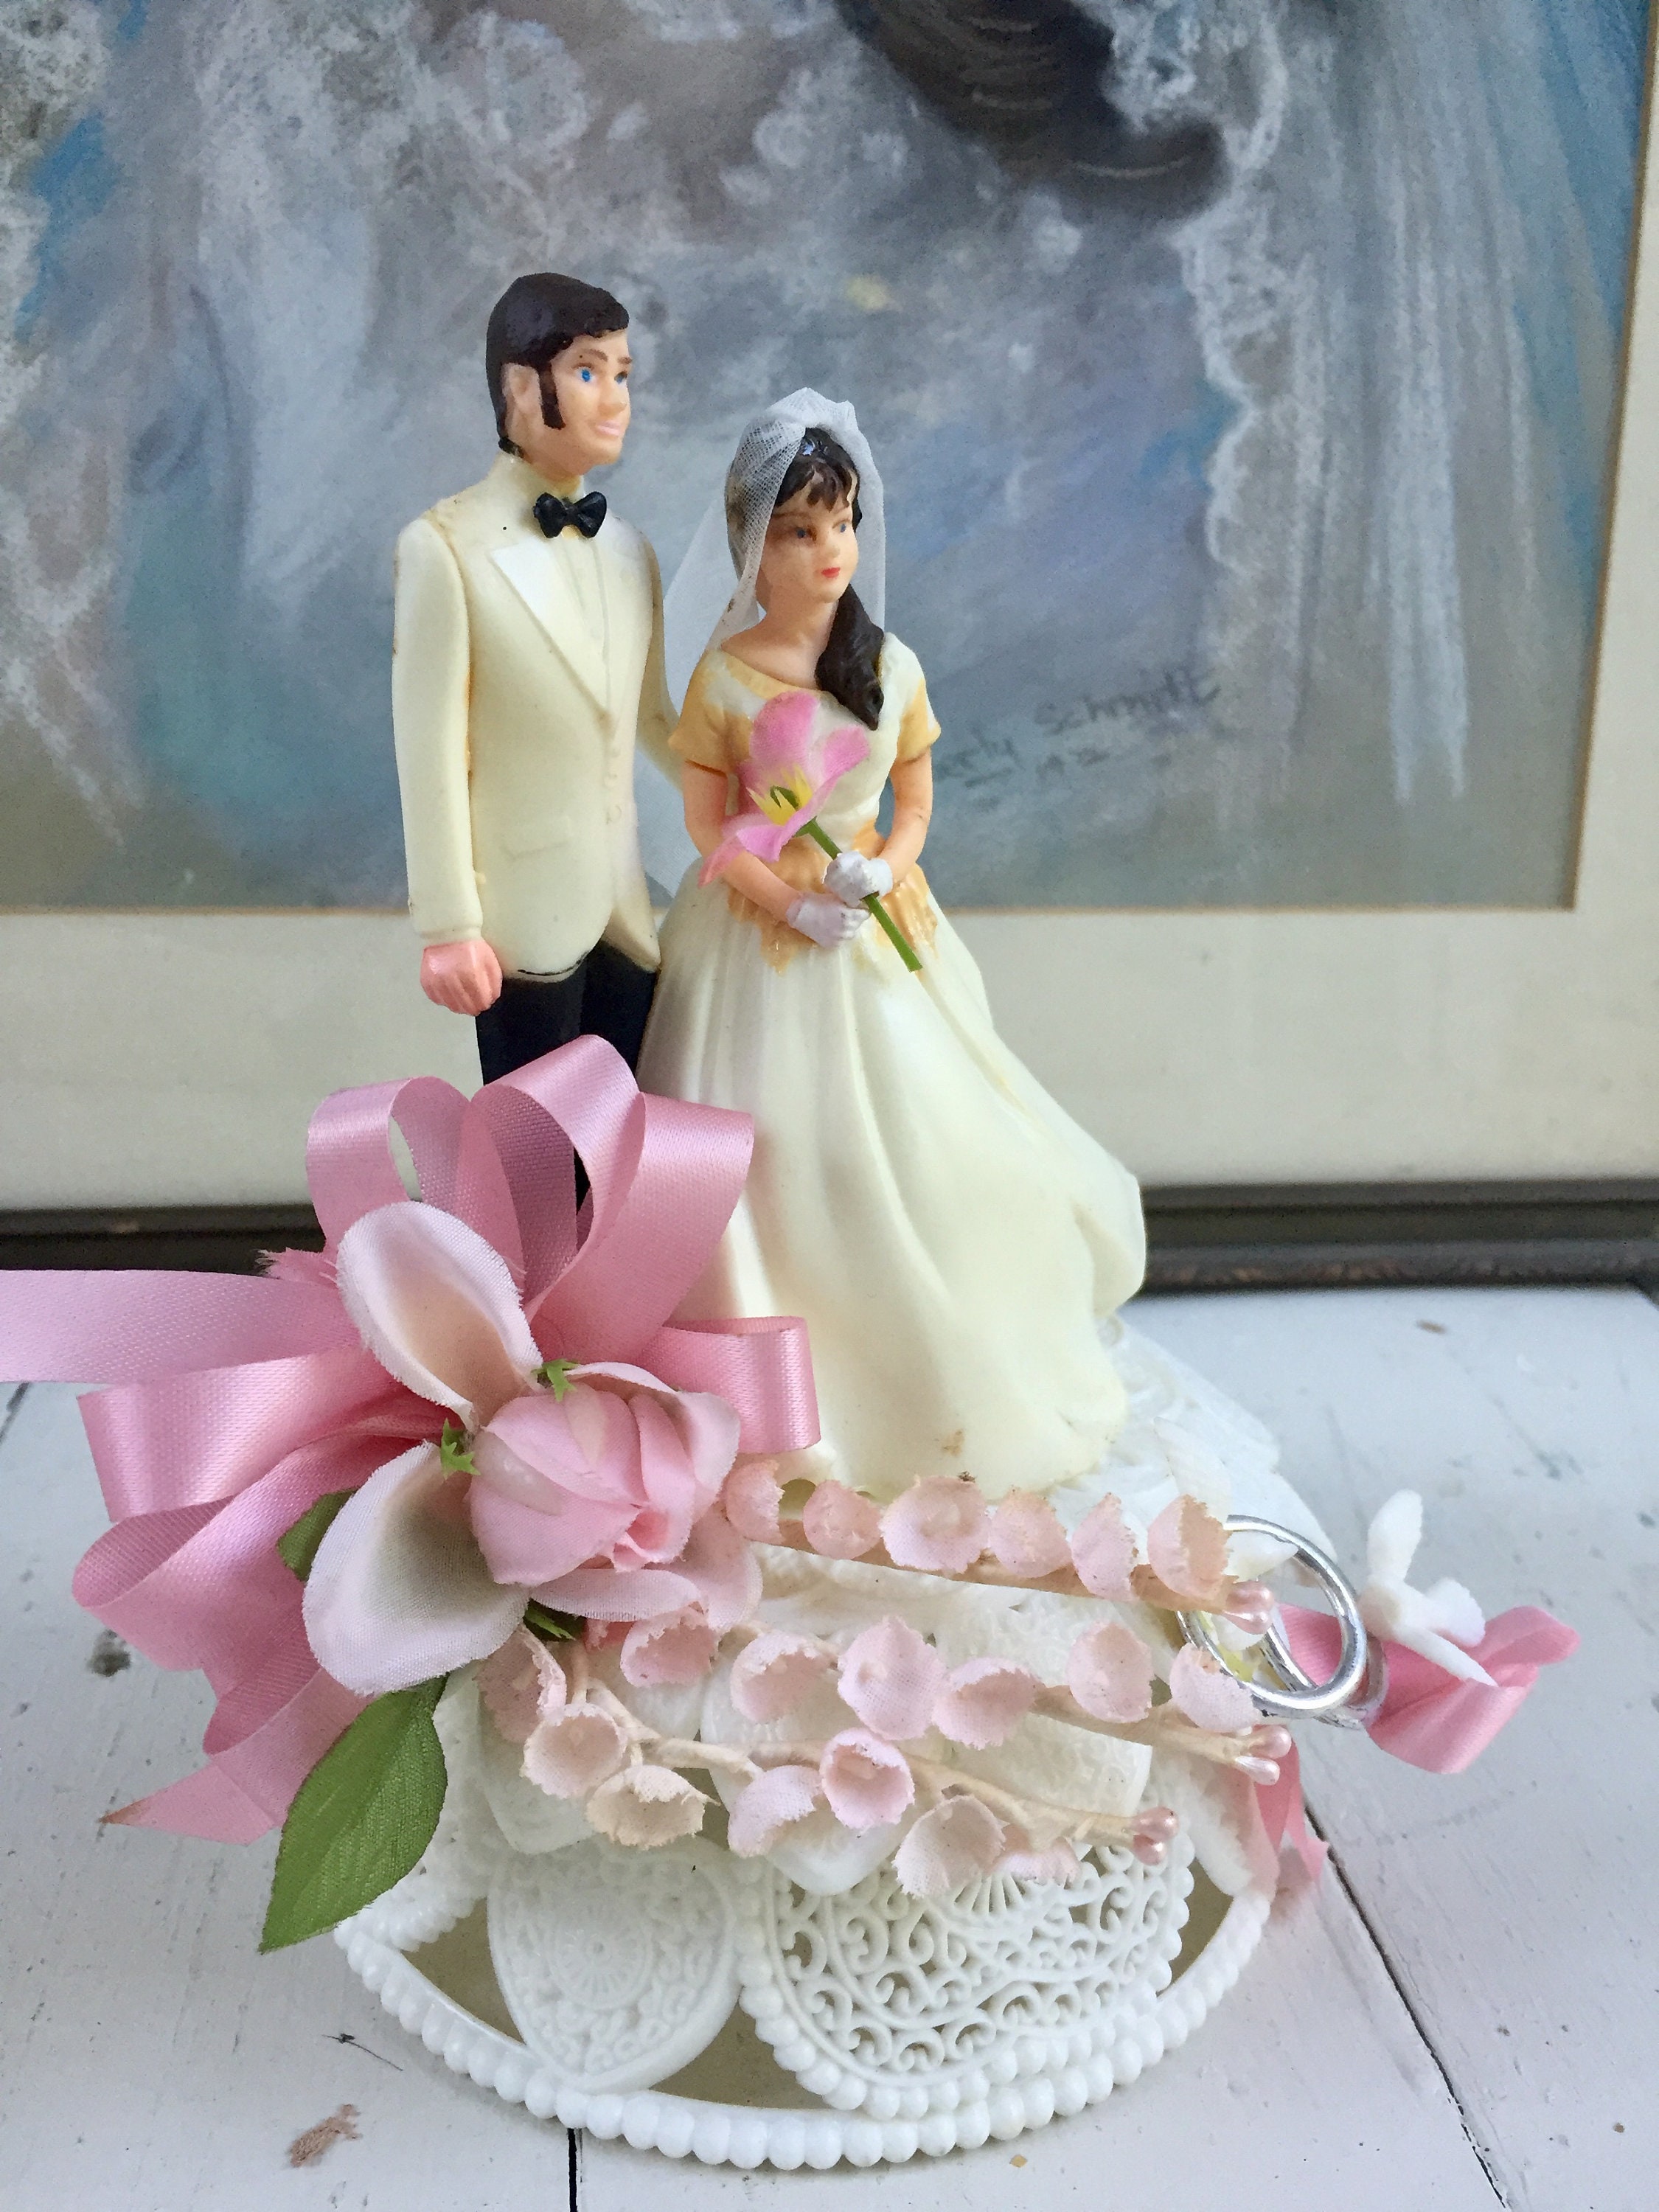 Bride + Groom 1948 chalk ware wedding cake topper from our collection.   Vintage wedding cake topper, Wedding cake toppers, Wedding cakes vintage